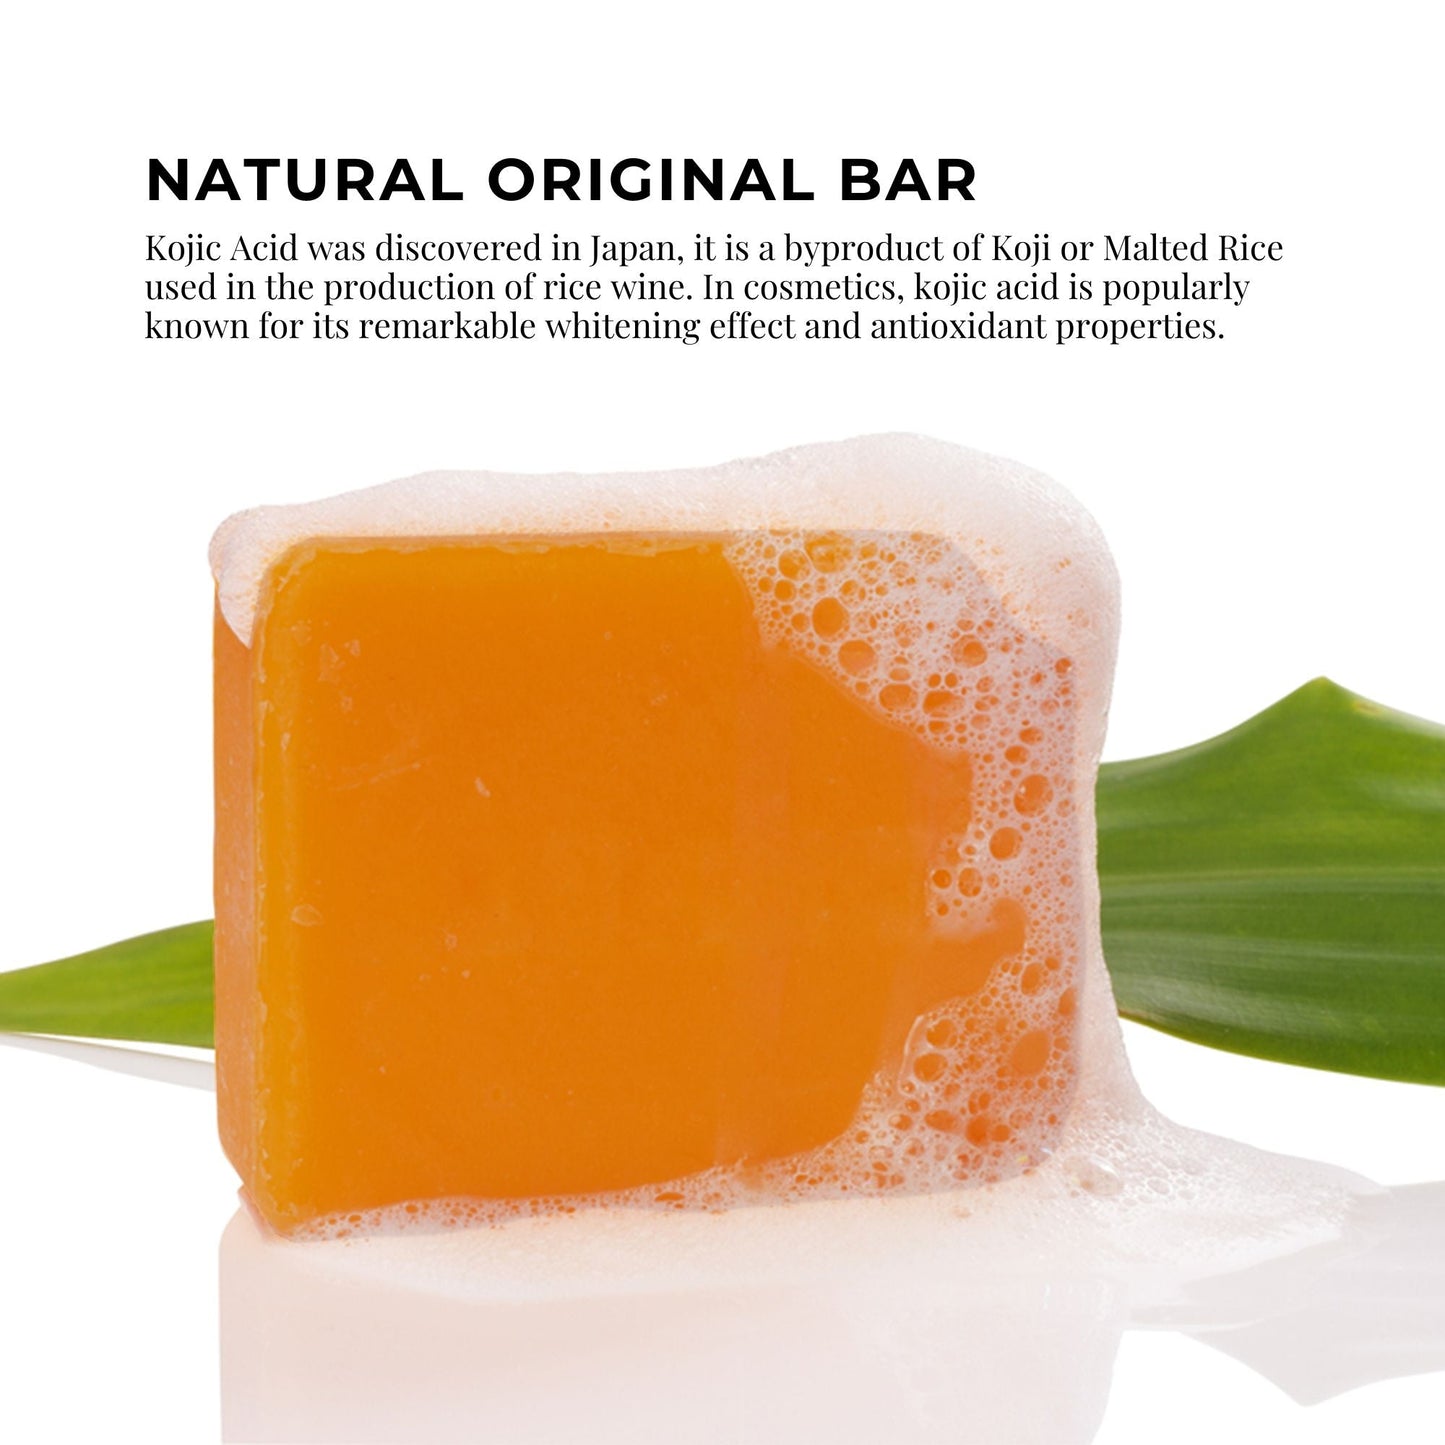 Kojie San Soap Bars - Skin Lightening Kojic Acid - Natural Original Bar - Bulk